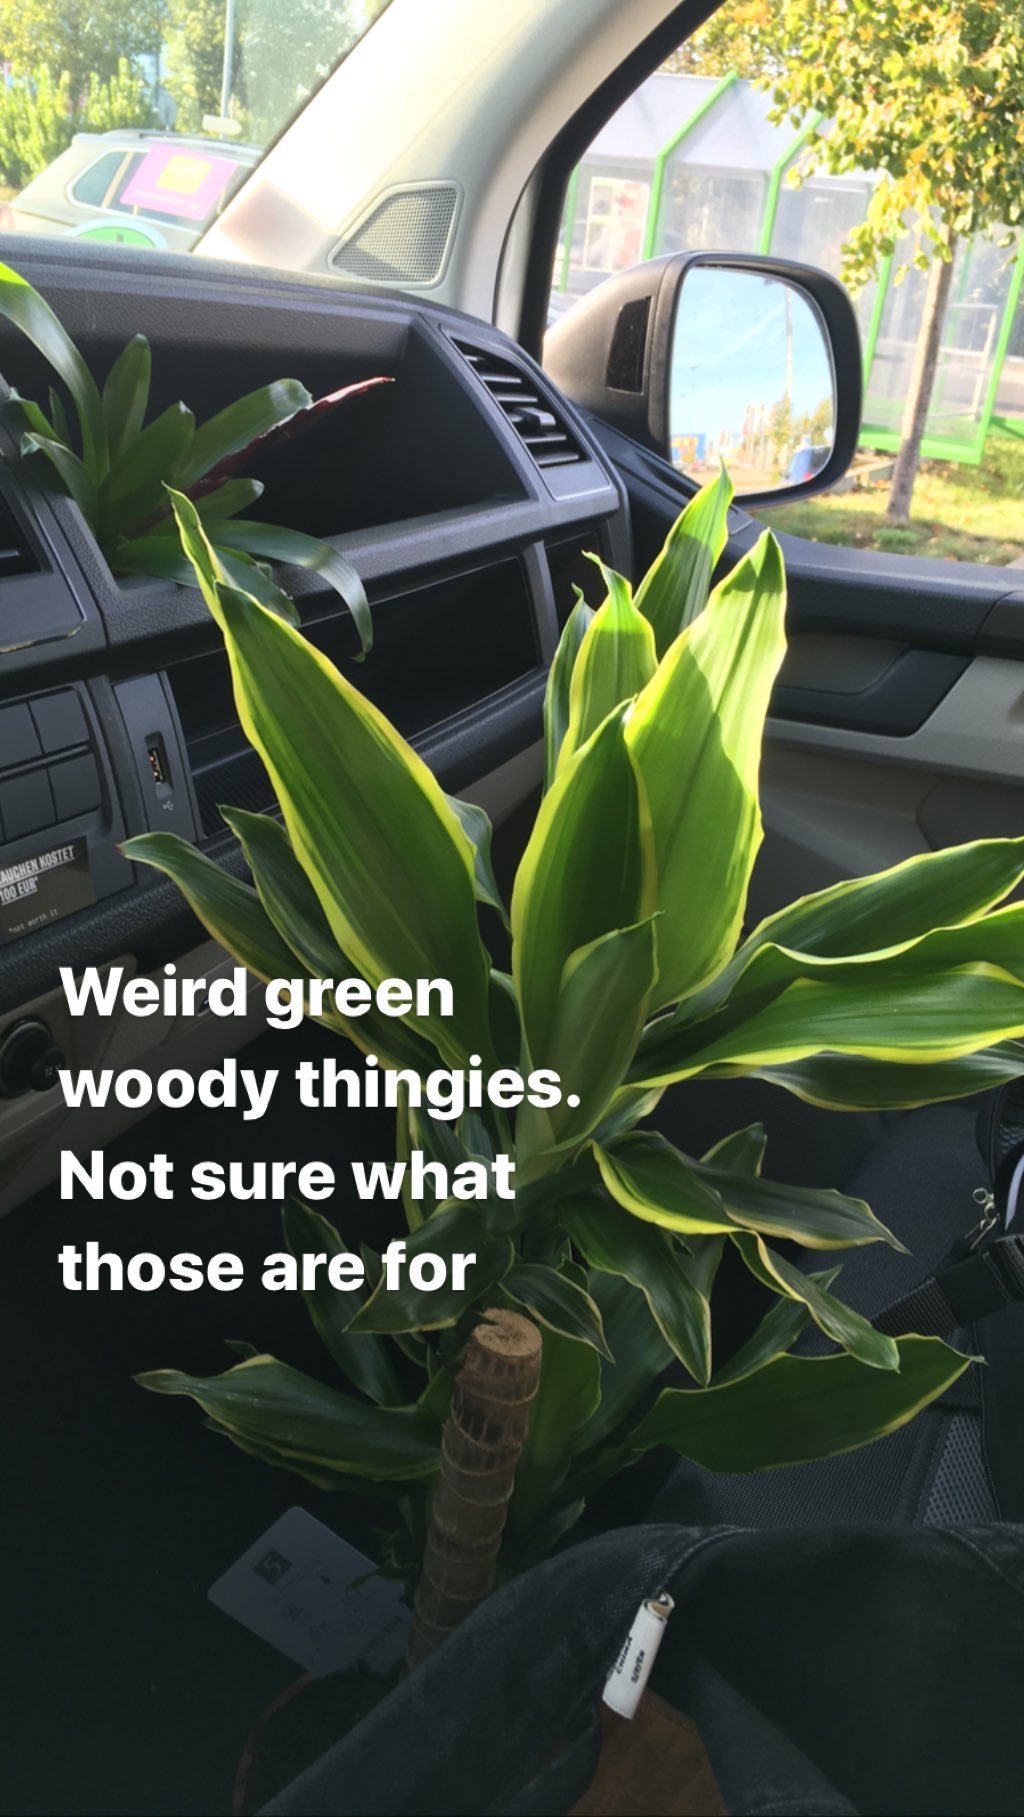 Weird green woody thingies.